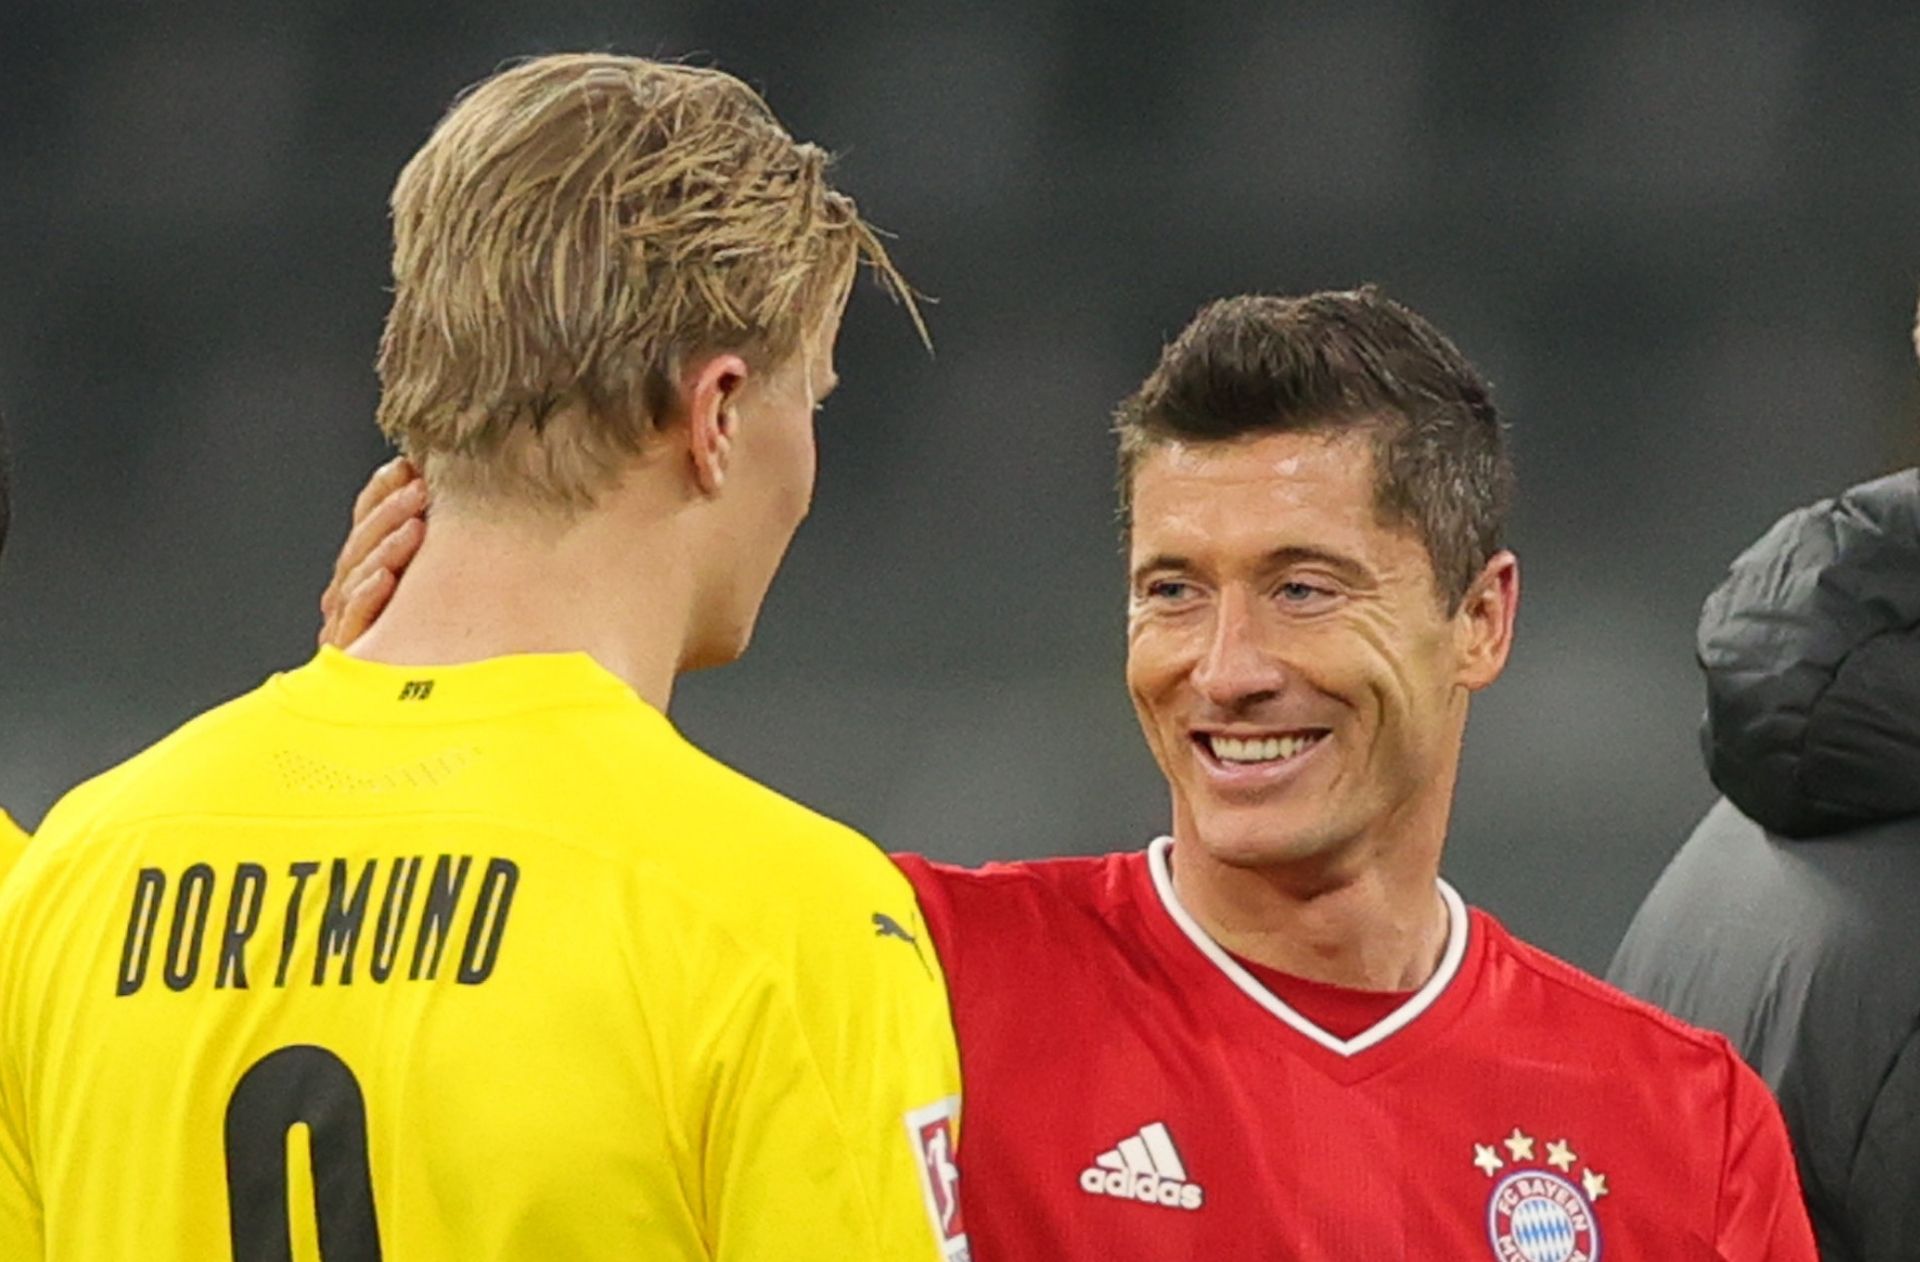 “He deserves it” - Lewandowski applauds Haaland for Golden Boy win